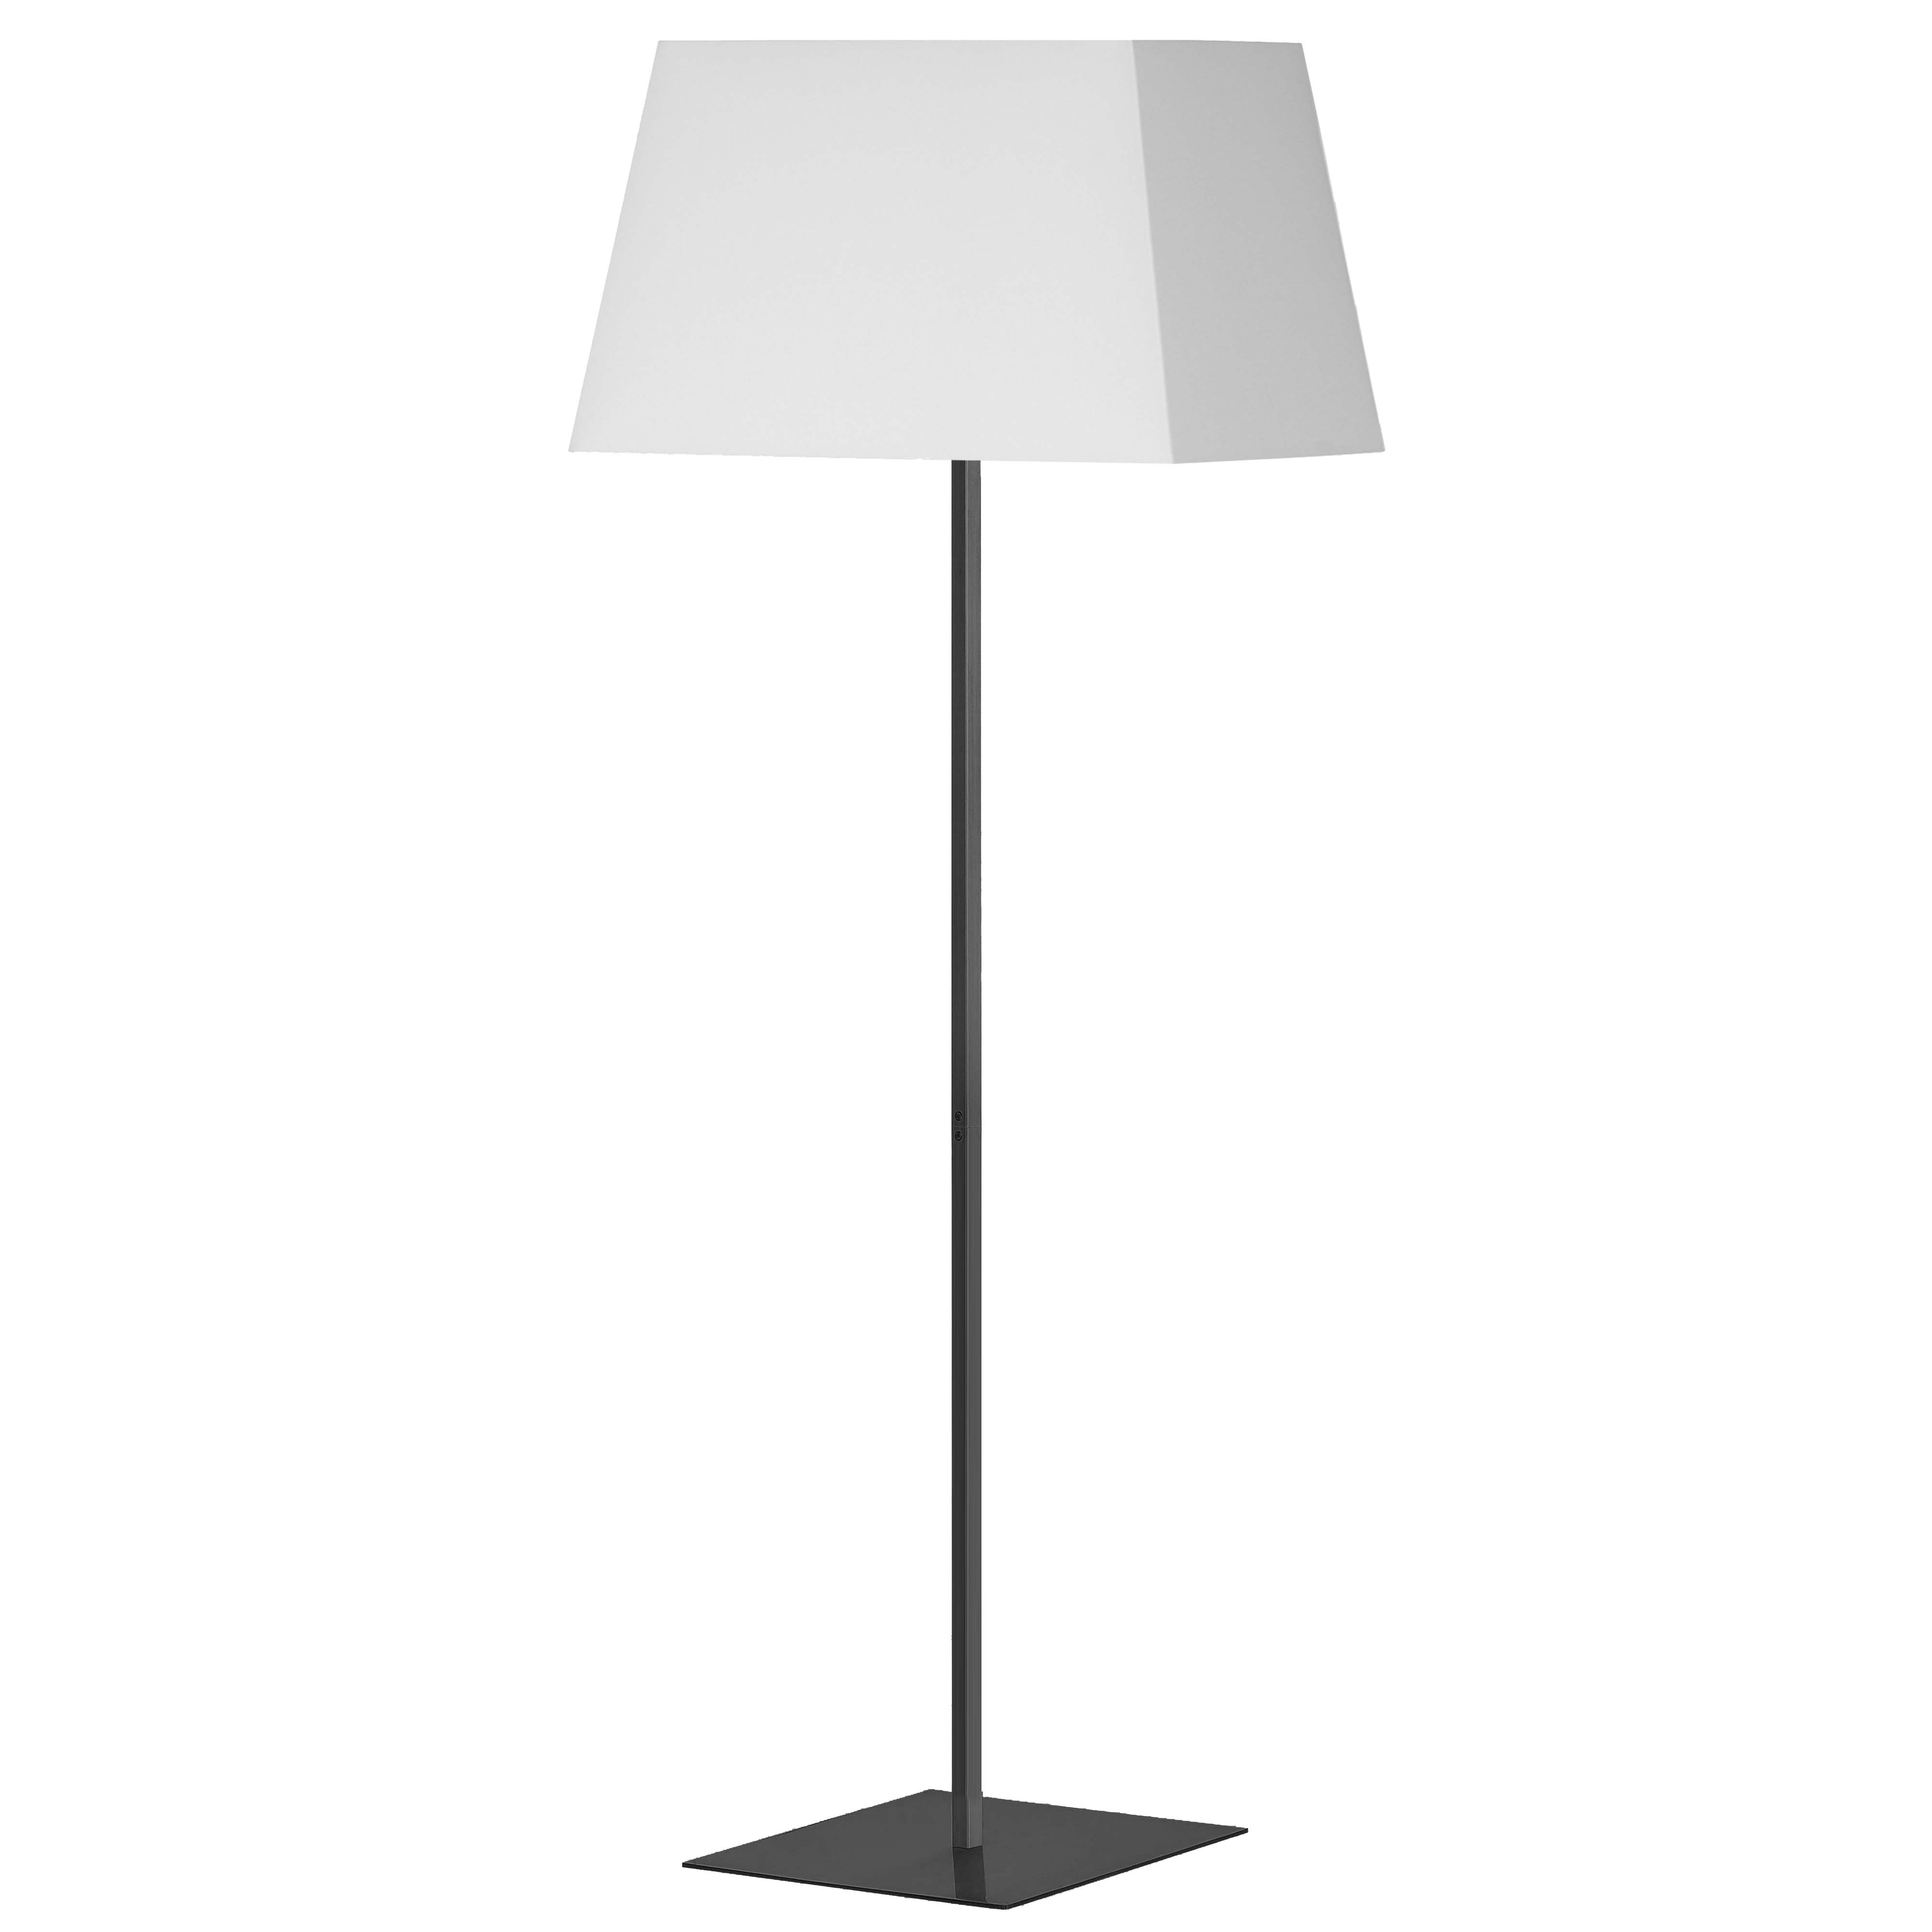 1LT Sq Base Floor Lamp, MB w/ WH Shade